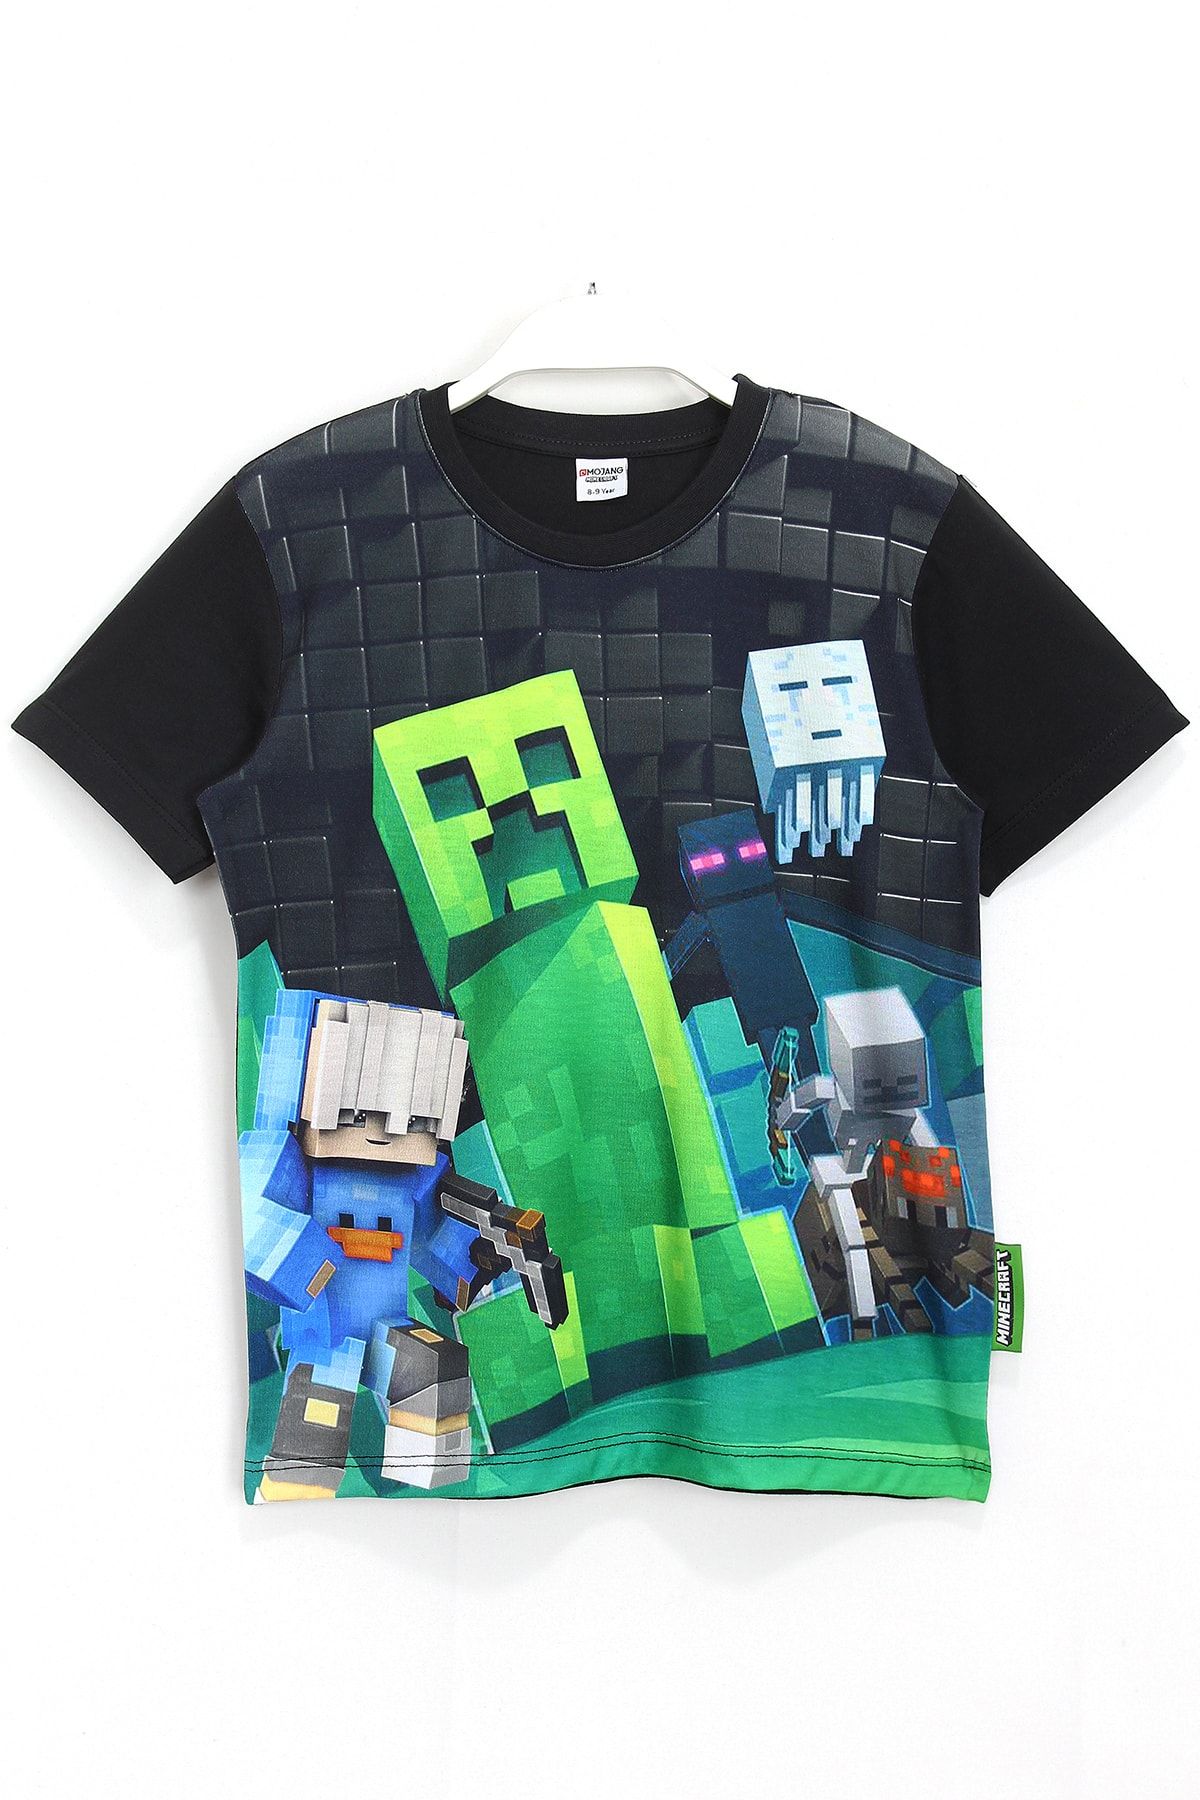 DobaKids Minecraft Creeper 3d Dijital Baskı Erkek Çocuk T-shirt Siyah